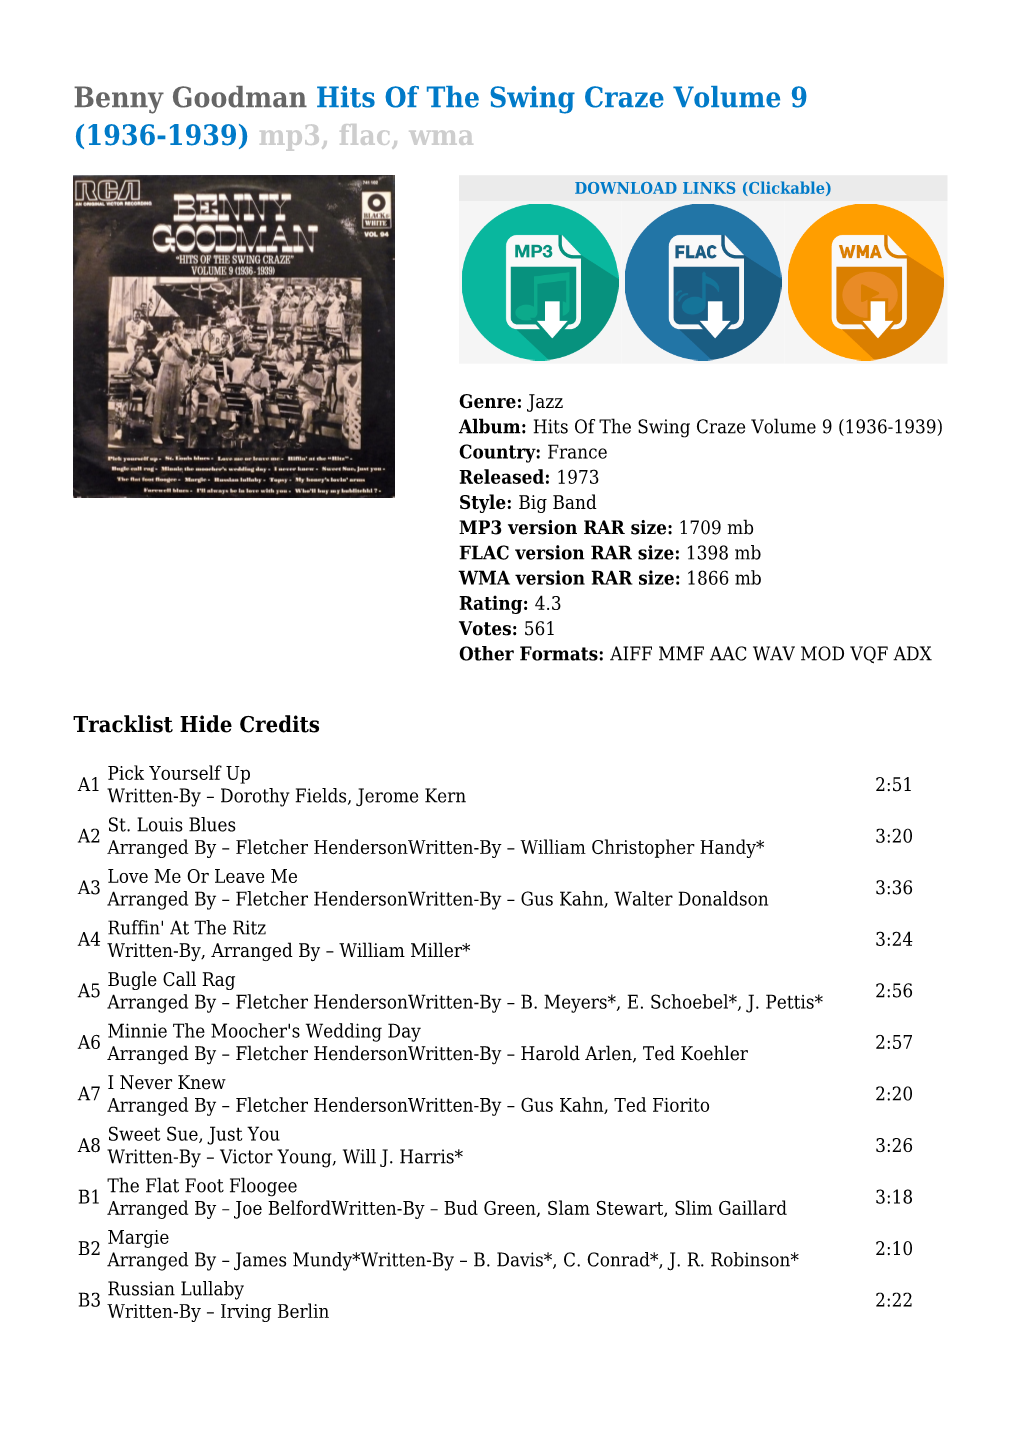 Benny Goodman Hits of the Swing Craze Volume 9 (1936-1939) Mp3, Flac, Wma